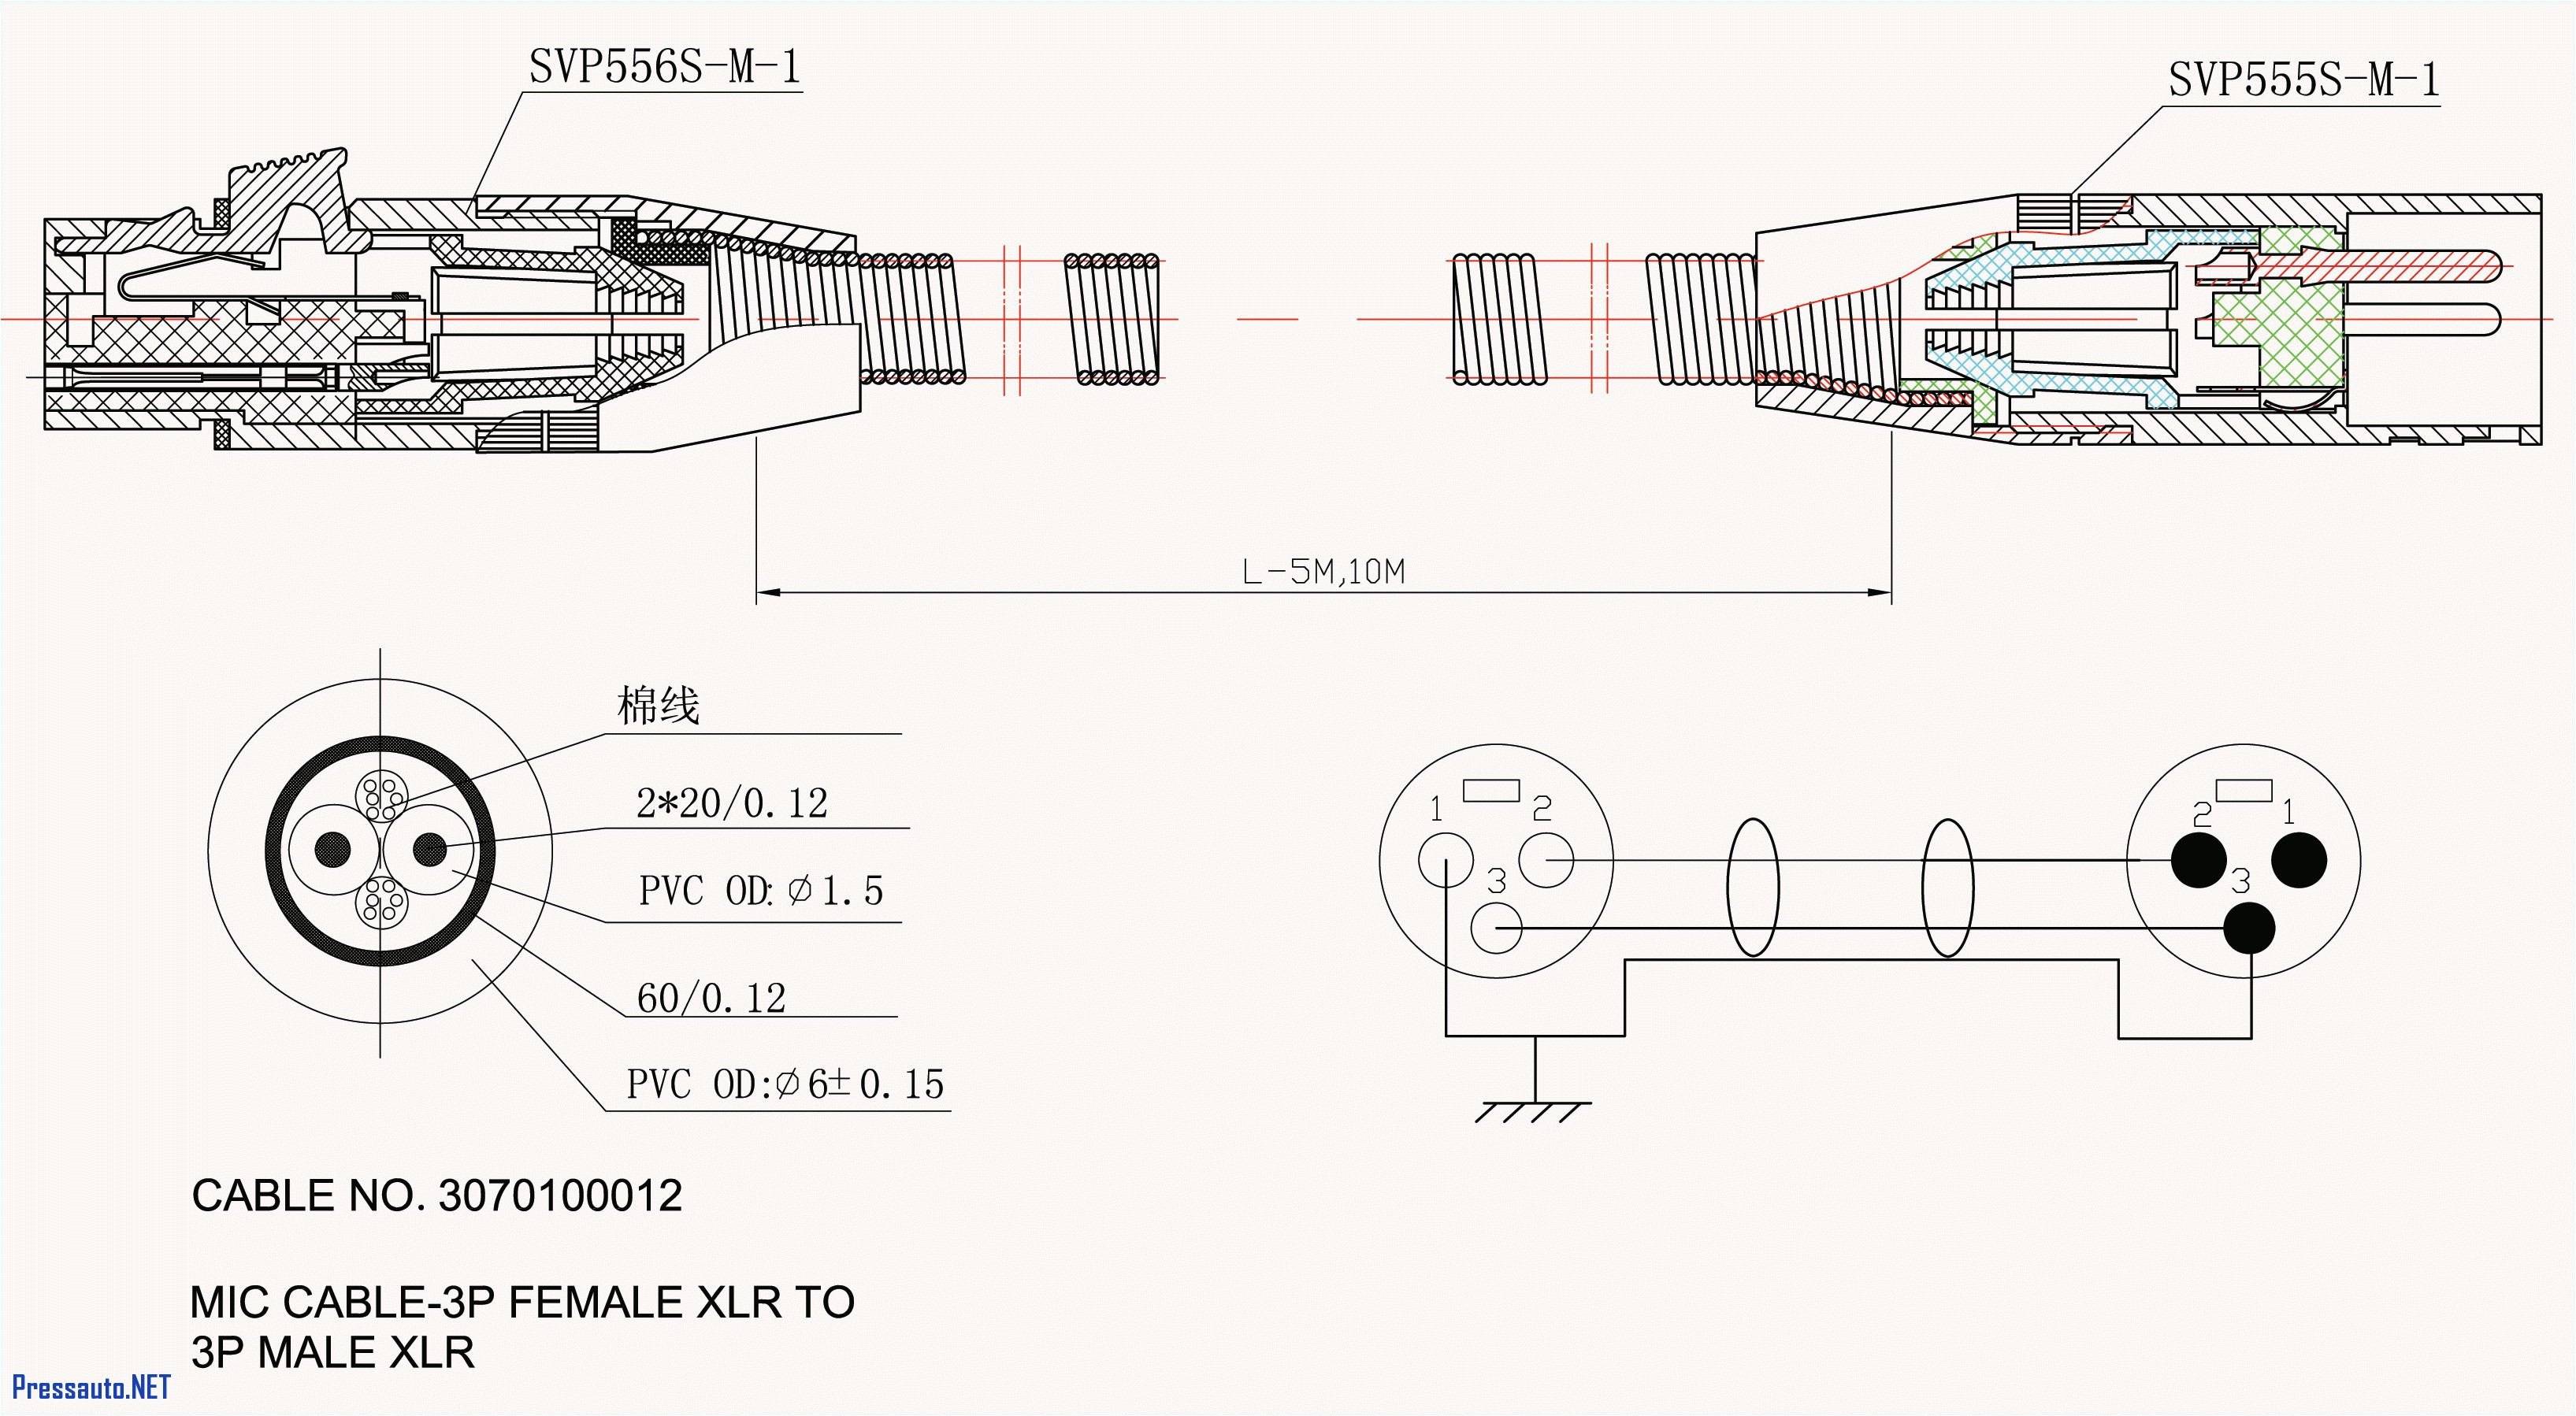 20 hyundai tiburon radio wiring diagram and gmc envoy radio wiring of 20 hyundai tiburon radio wiring diagram jpg